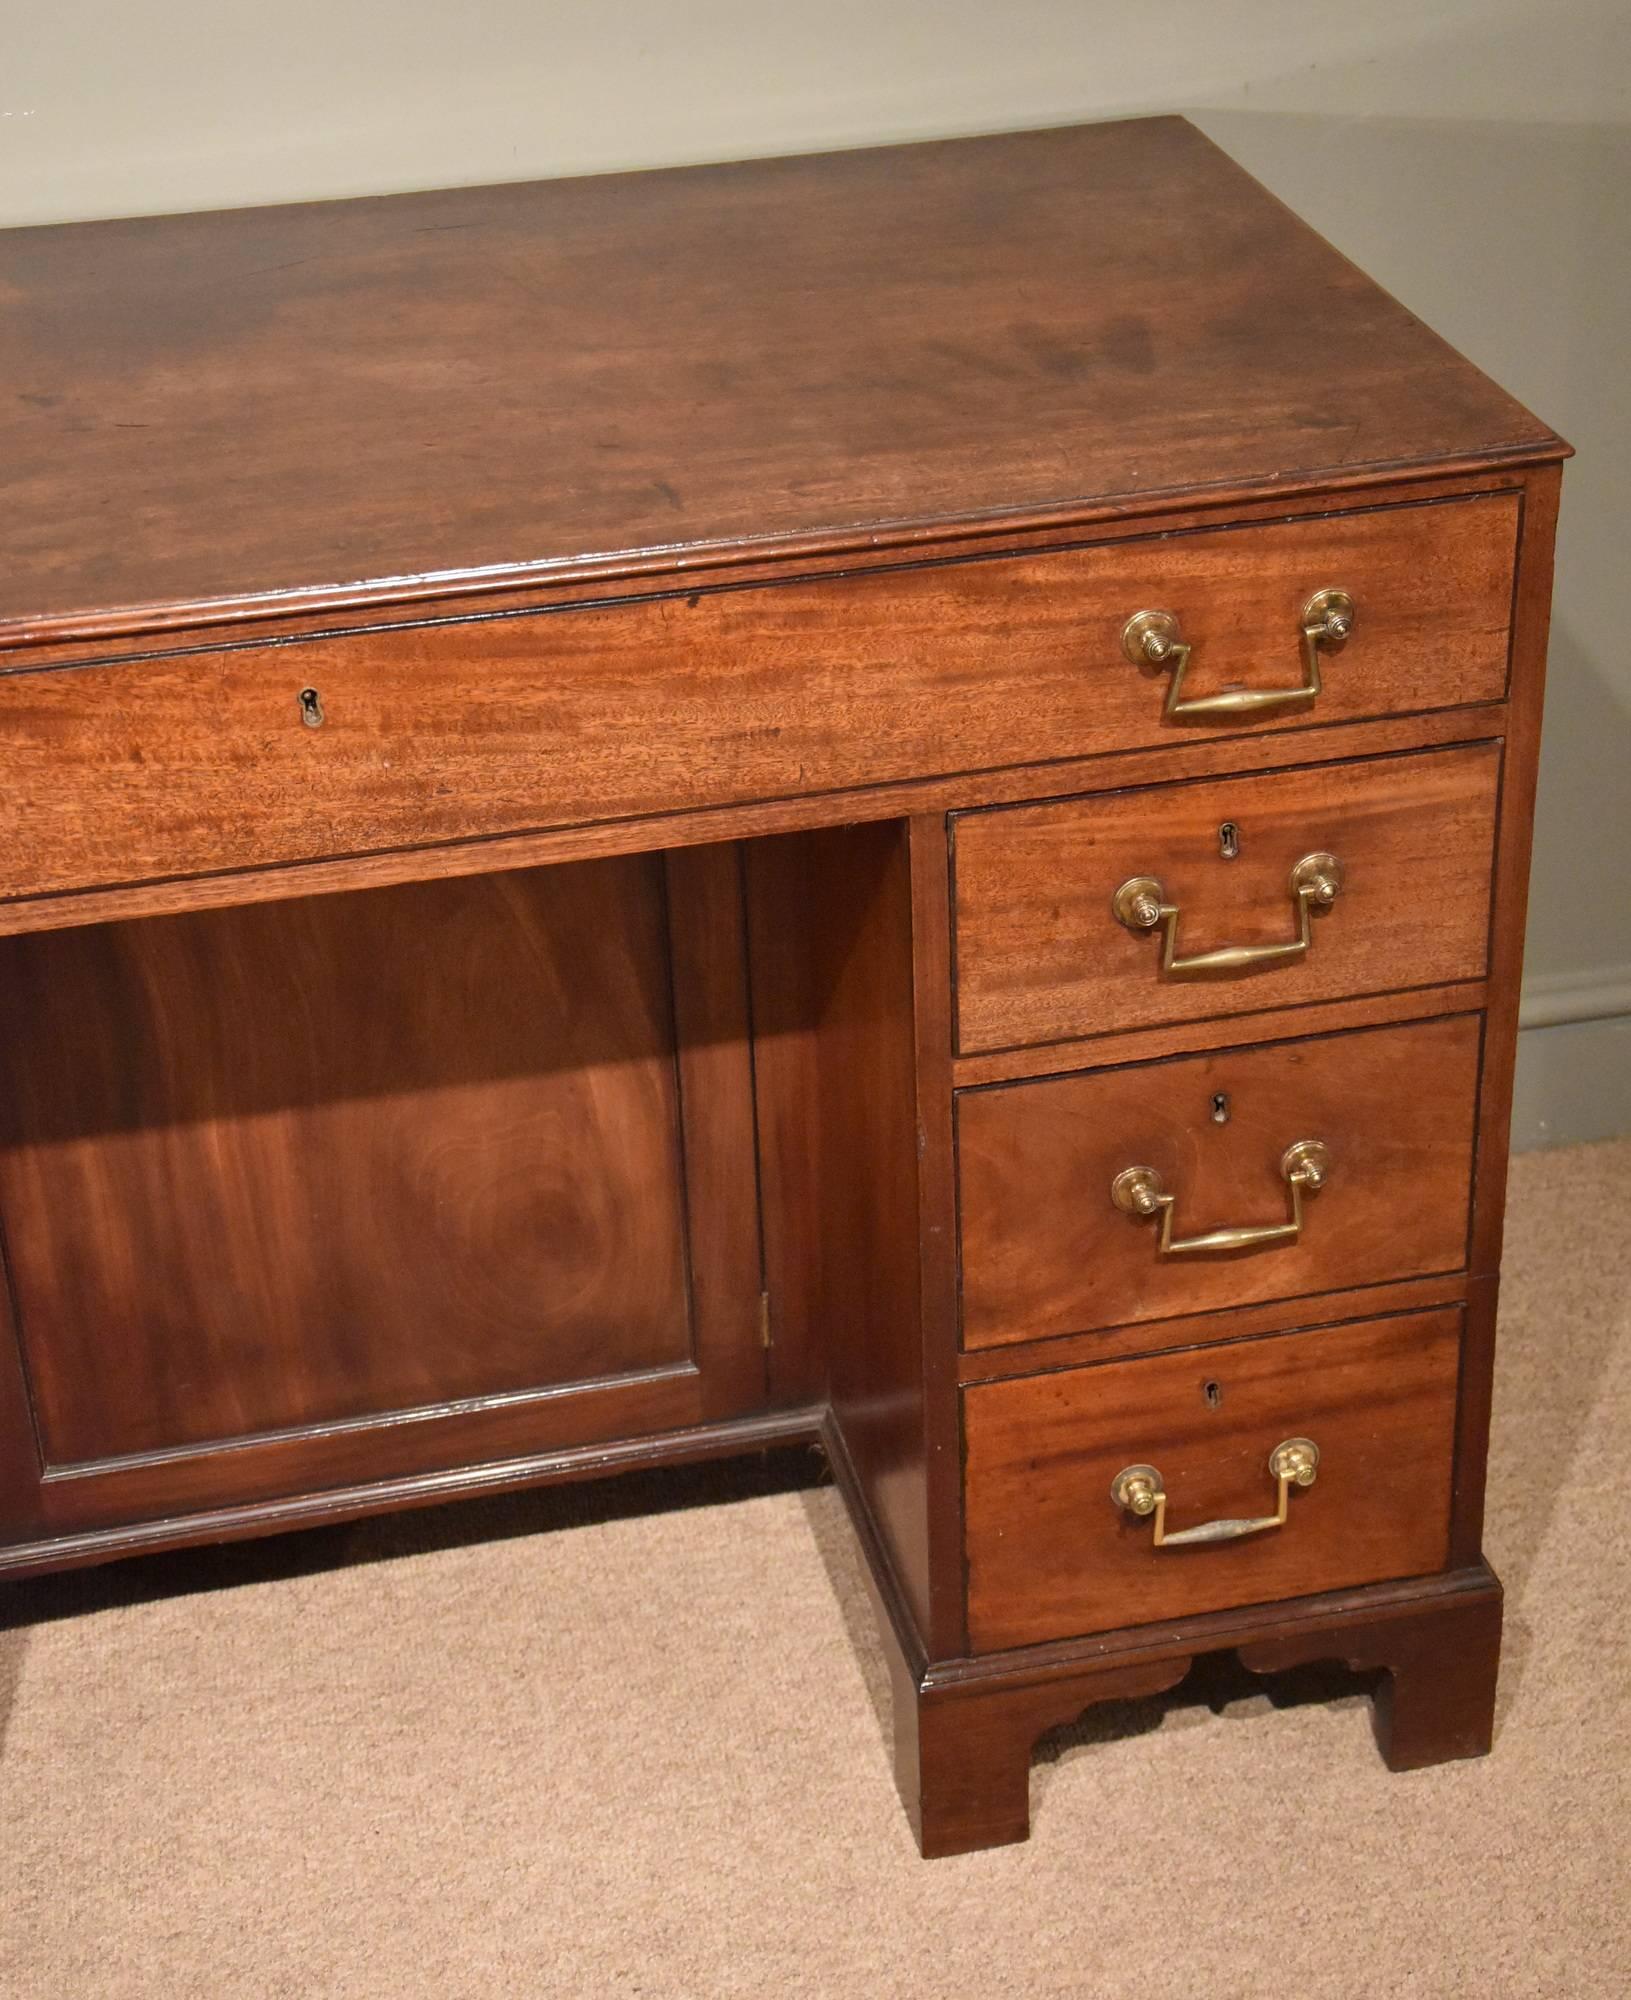 A good Regency period mahogany kneehole desk ebony stringing and original handles.

Dimensions
Height 32